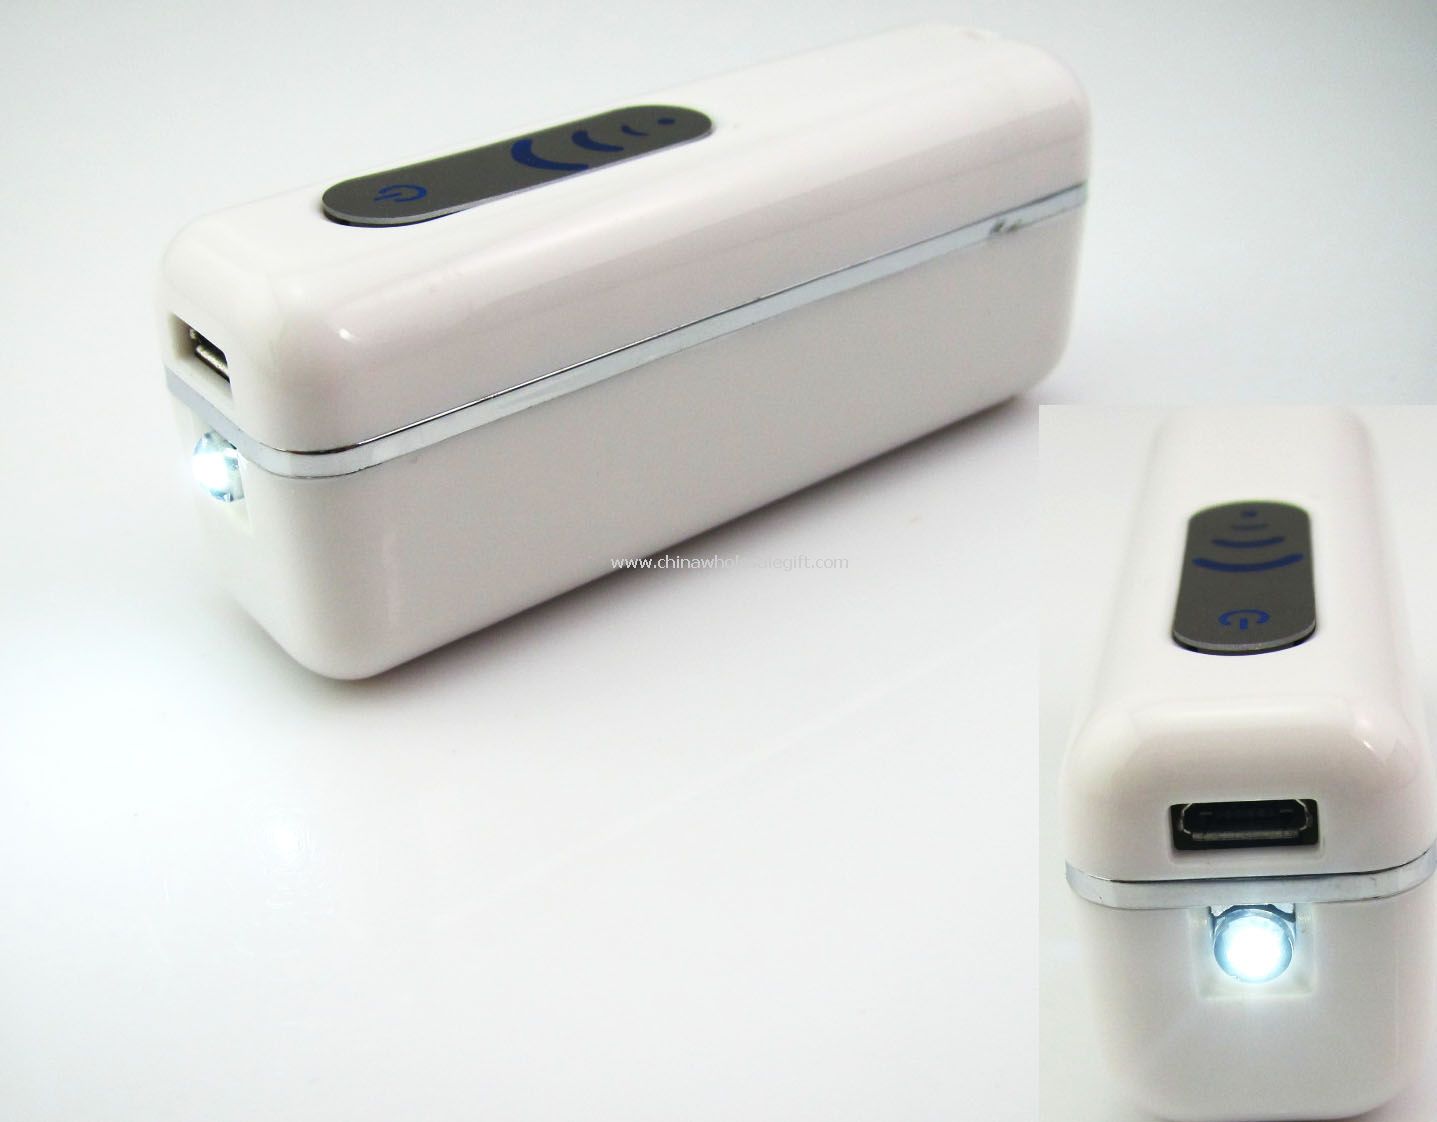 Universal USB power bank 2800mah with LED light